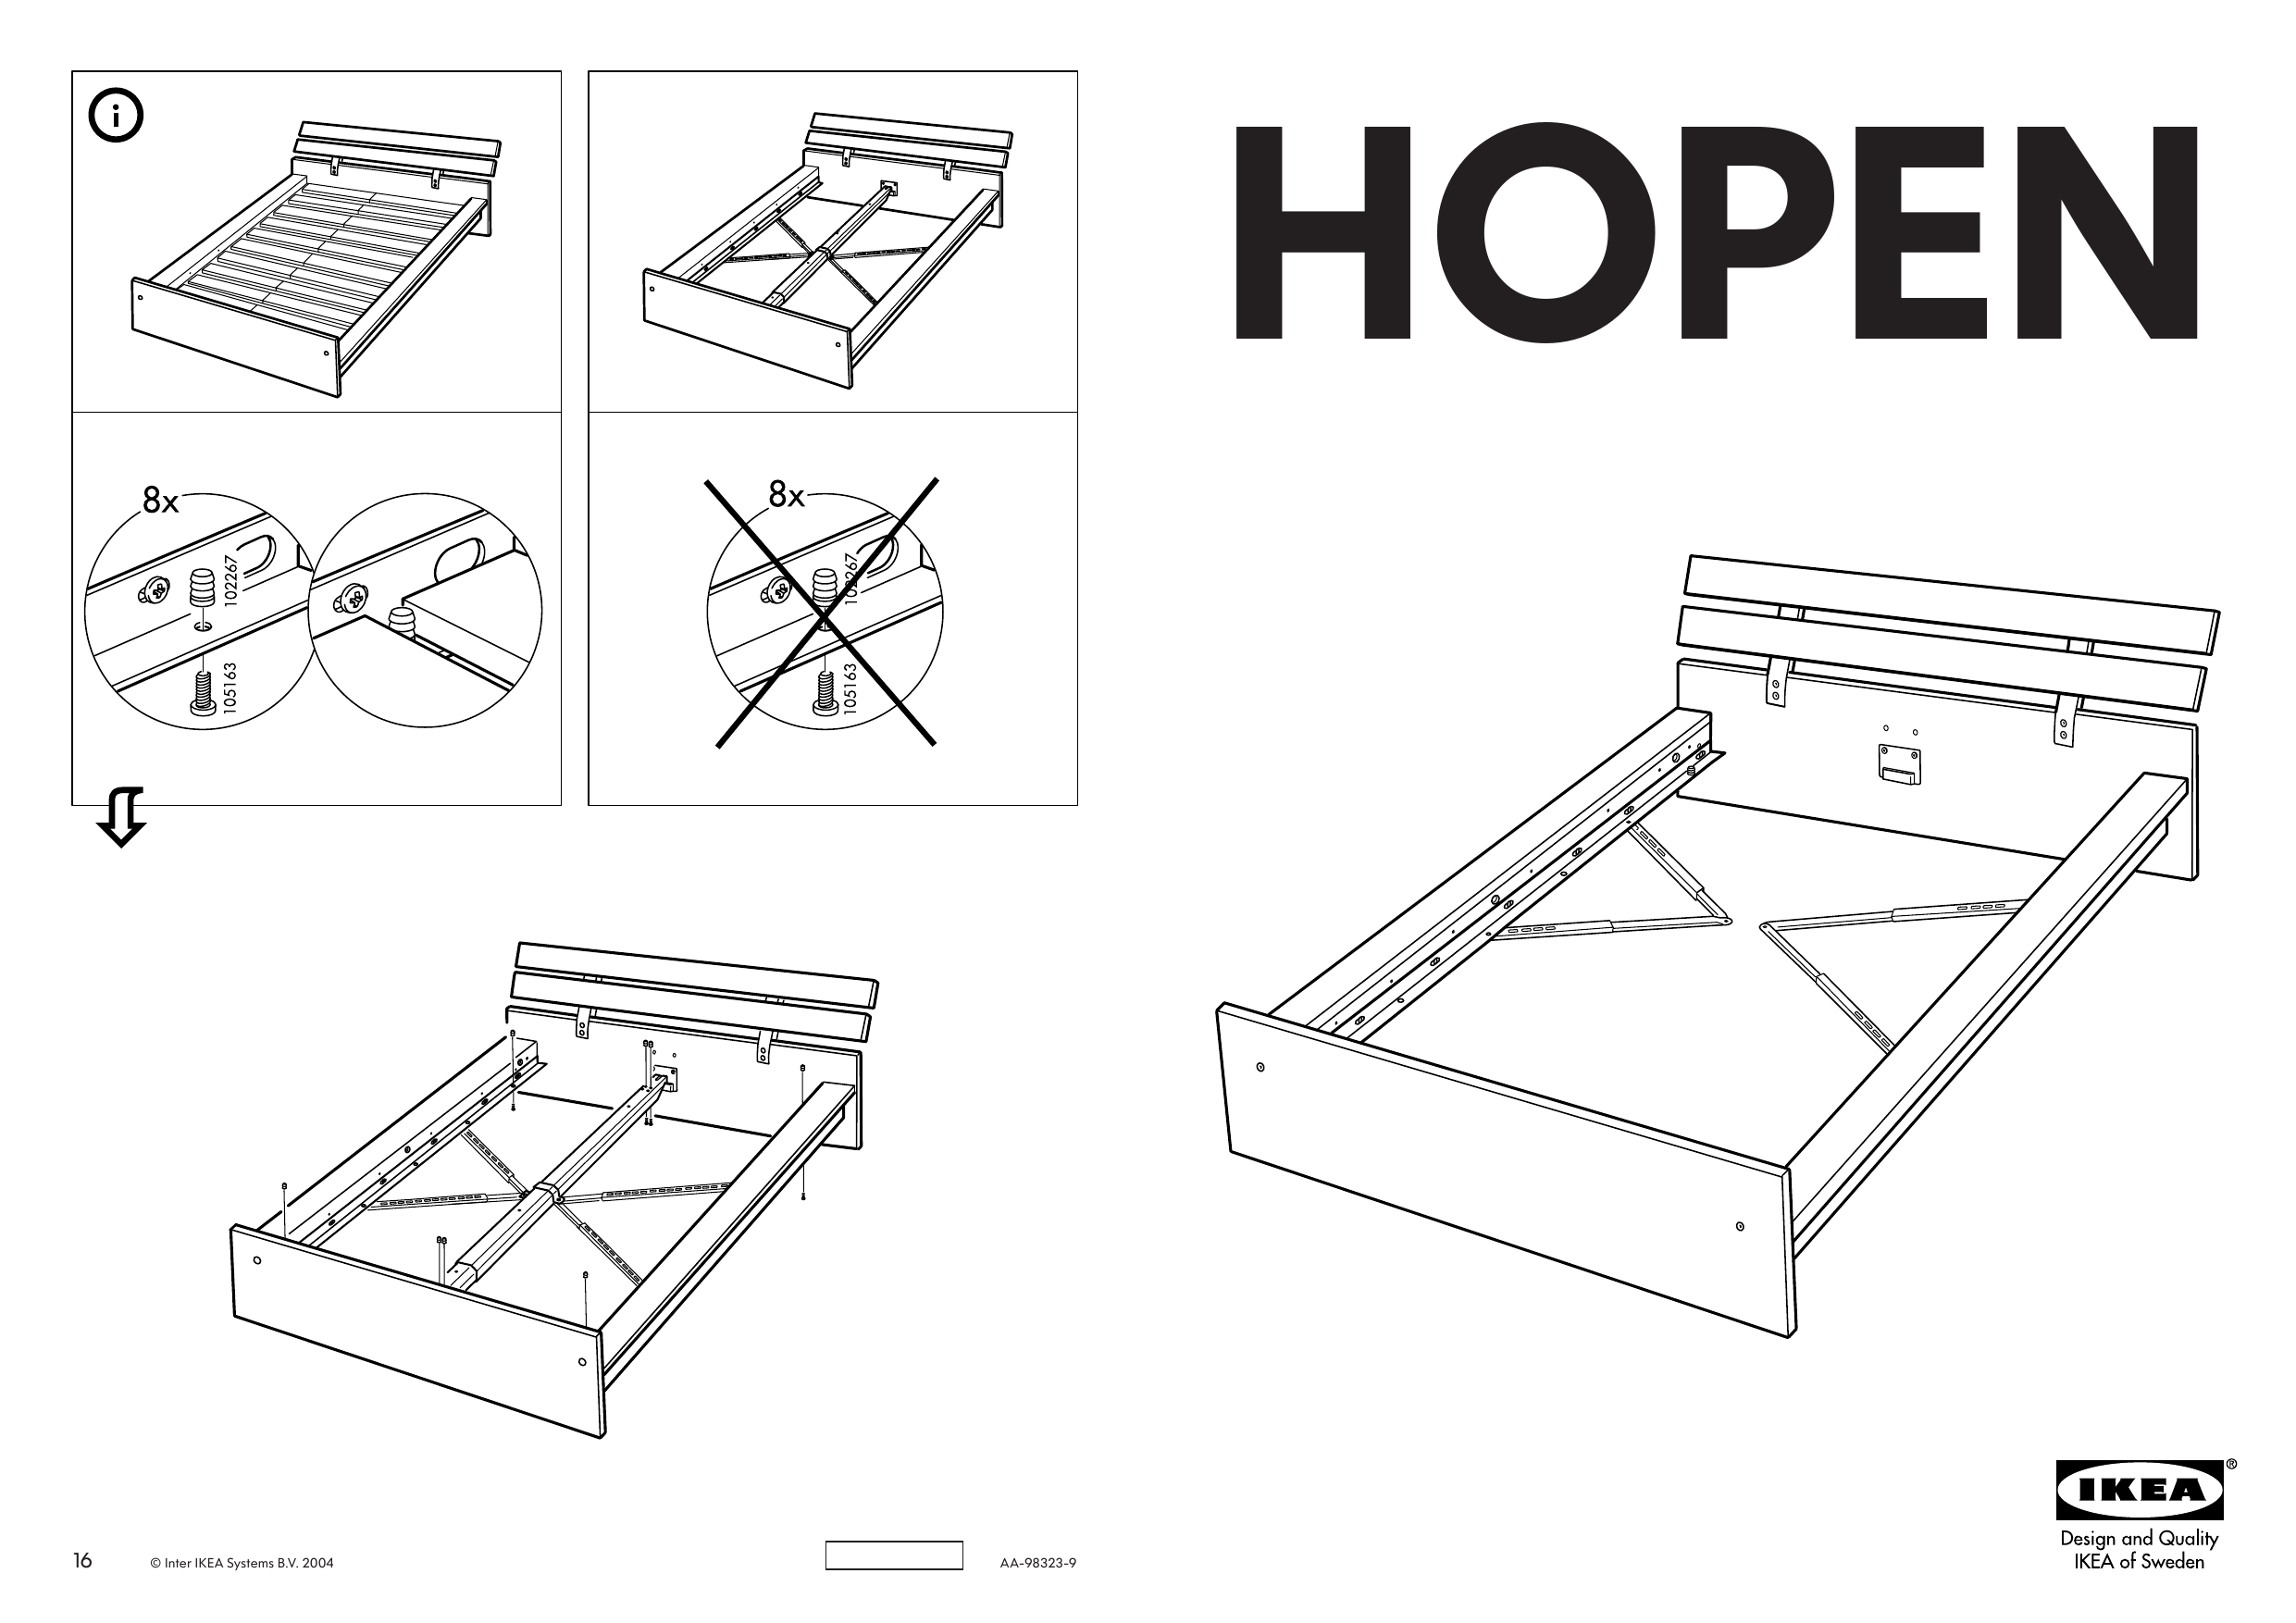 Ikea Hopen Owner Manual Manualzz, Ikea Hopen Bed Frame